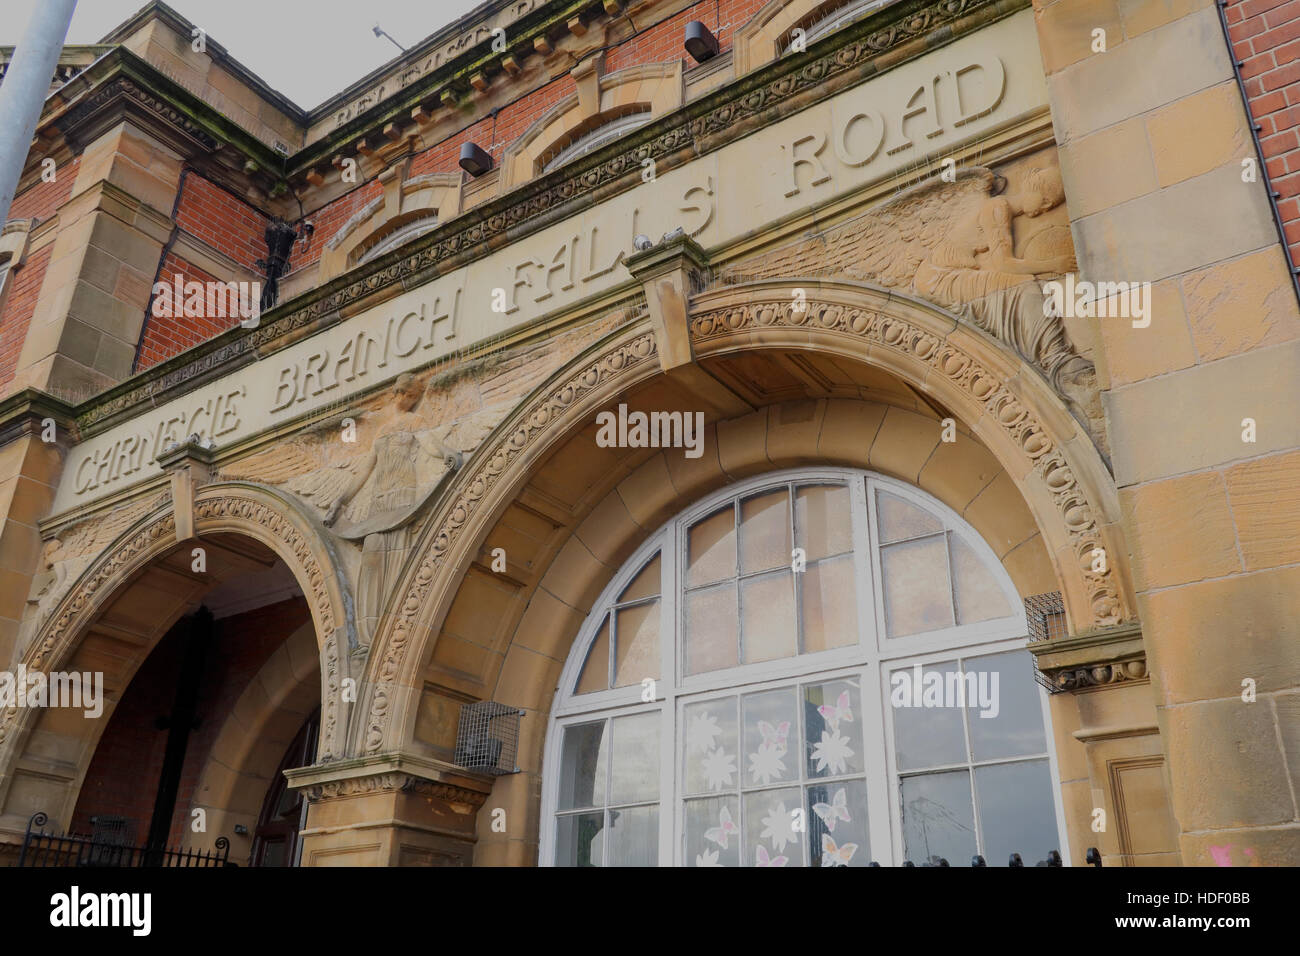 Belfast Falls Rd Carnegie Branch Library Facade & Entrance Stock Photo